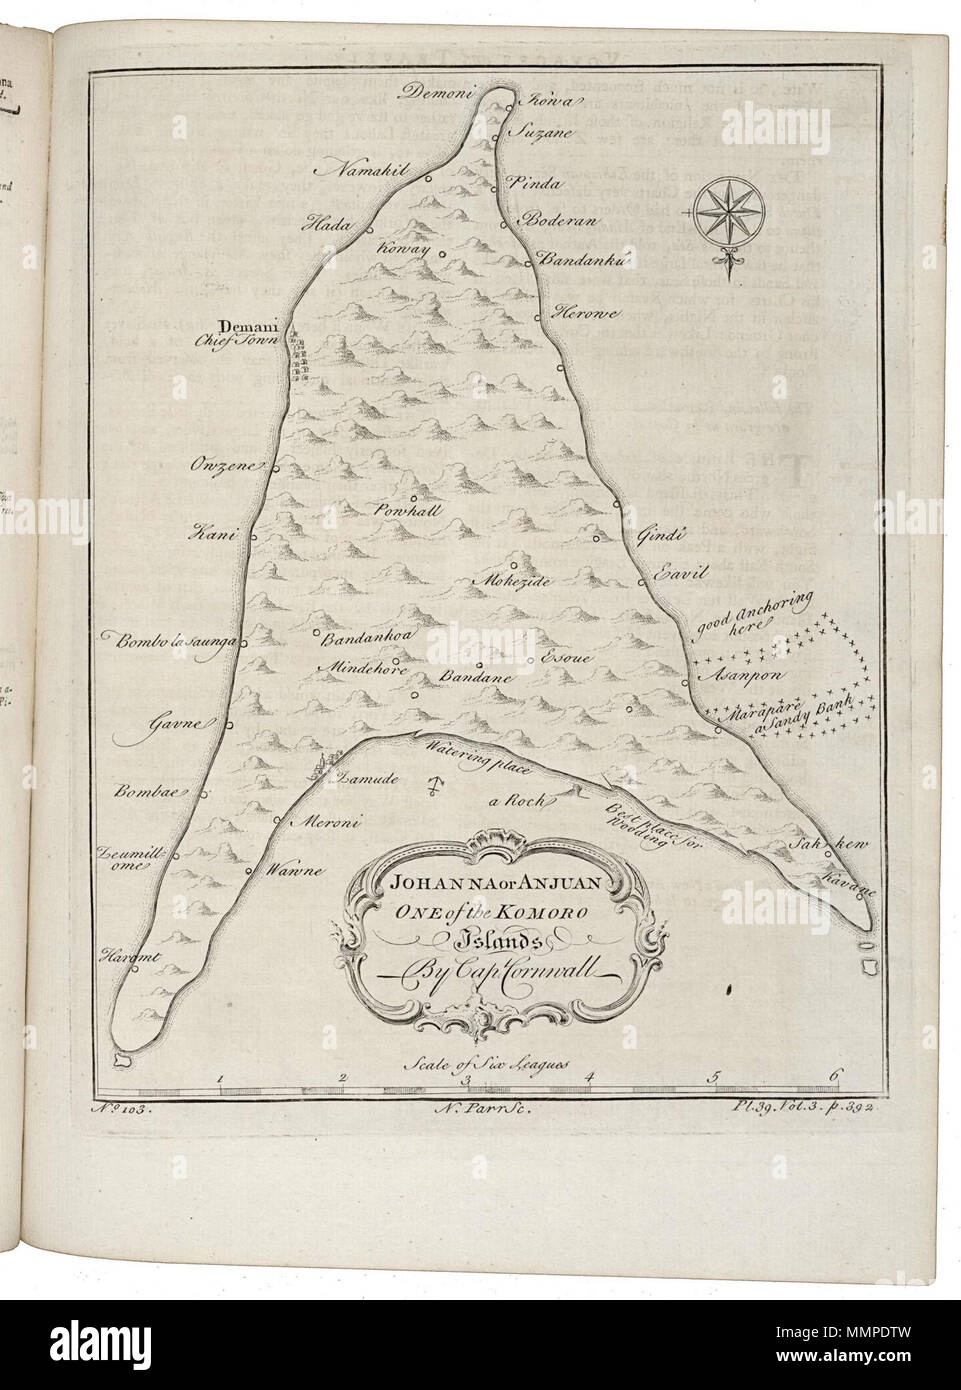 .  Nederlands: Kaart van Anjuan. Johanna or Anjuan / One of the Komoro Islands. Linksonder: No. 103. Rechtsonder: Pl. 39. Vol. p. 392. Cf. Koninklijke Bibliotheek, Den Haag, inv. nr. 693 C 6 dl VI, na p. 541. English: Map of Anjuan. Johanna or Anjuan / One of the Komoro Islands. Bottom left: No. 103. Bottom right: Pl. 39. Vol. p. 392. Cf. Koninklijke Bibliotheek, The Hague, inv. nr. 693 C 6 part VI, after p. 541.  Nederlands: Kaart van Anjuan English: Map of Anjuan . 1745. Creator:G. Child Creator:Cornwall Nederlands: G. Child (graveur / etser), Anoniem / Anonymous (uitgever), Cornwall (landme Stock Photo